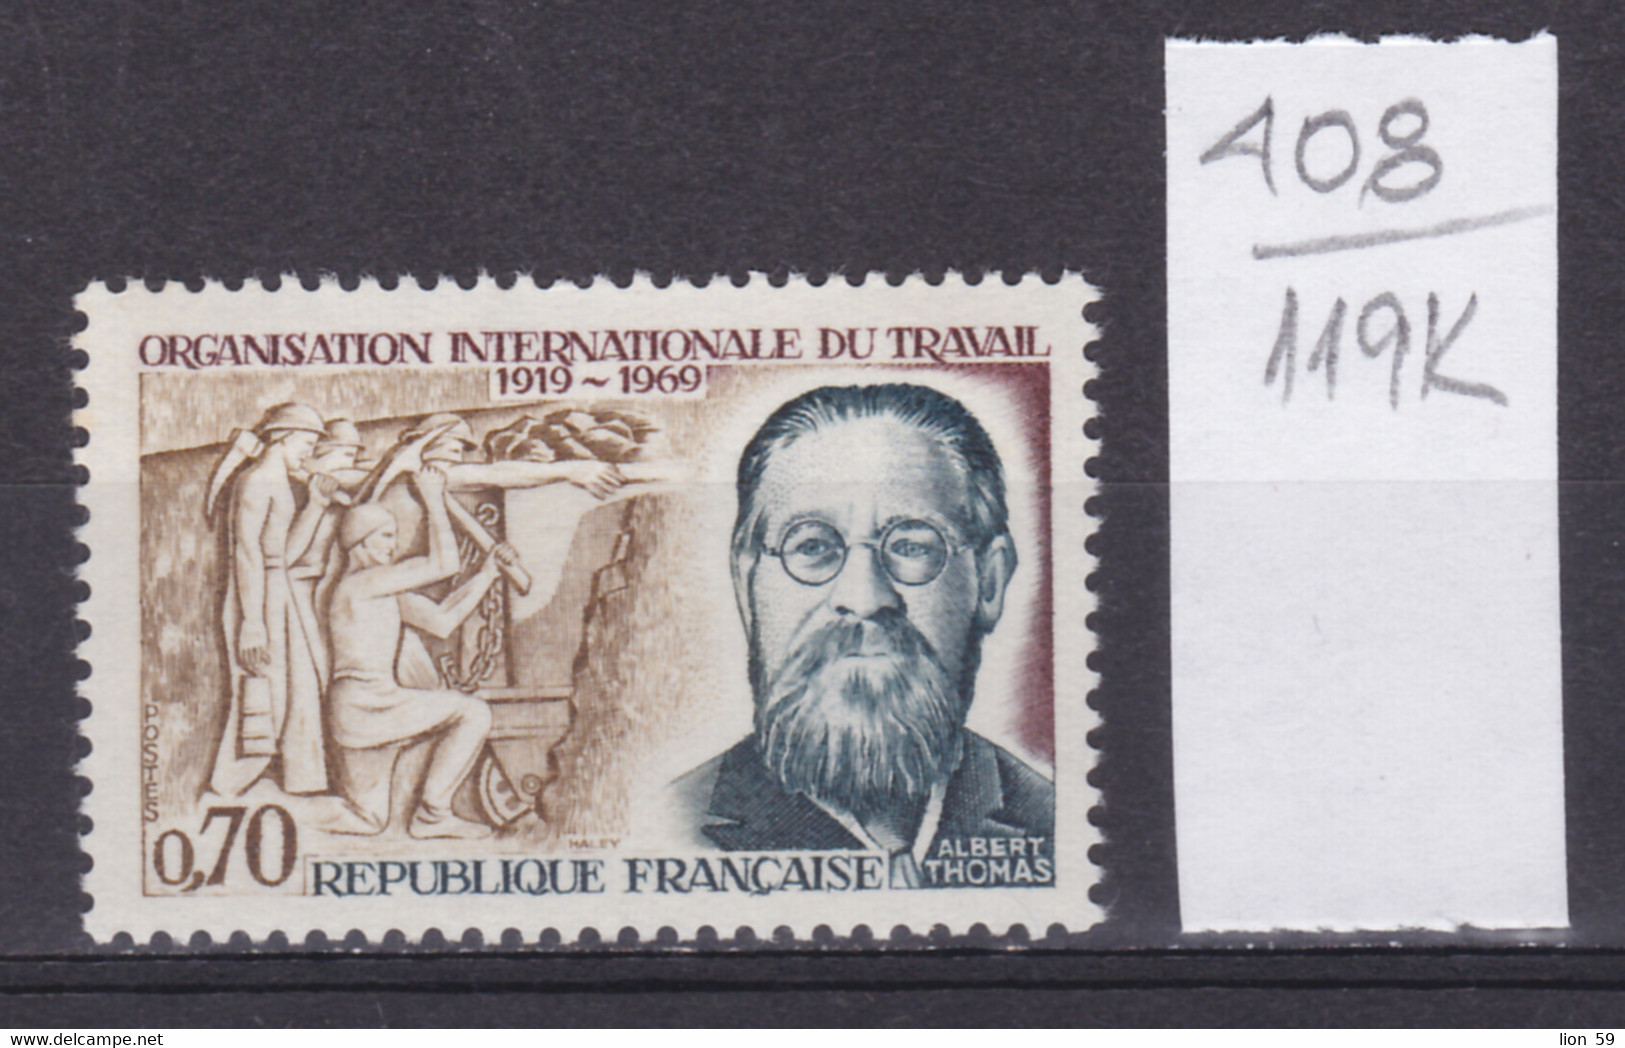 119K408 / France 1969 Michel Nr. 1669 MNH (**) ILO International Labor Organization 1919-1969 Albert Thomas - Director - ILO